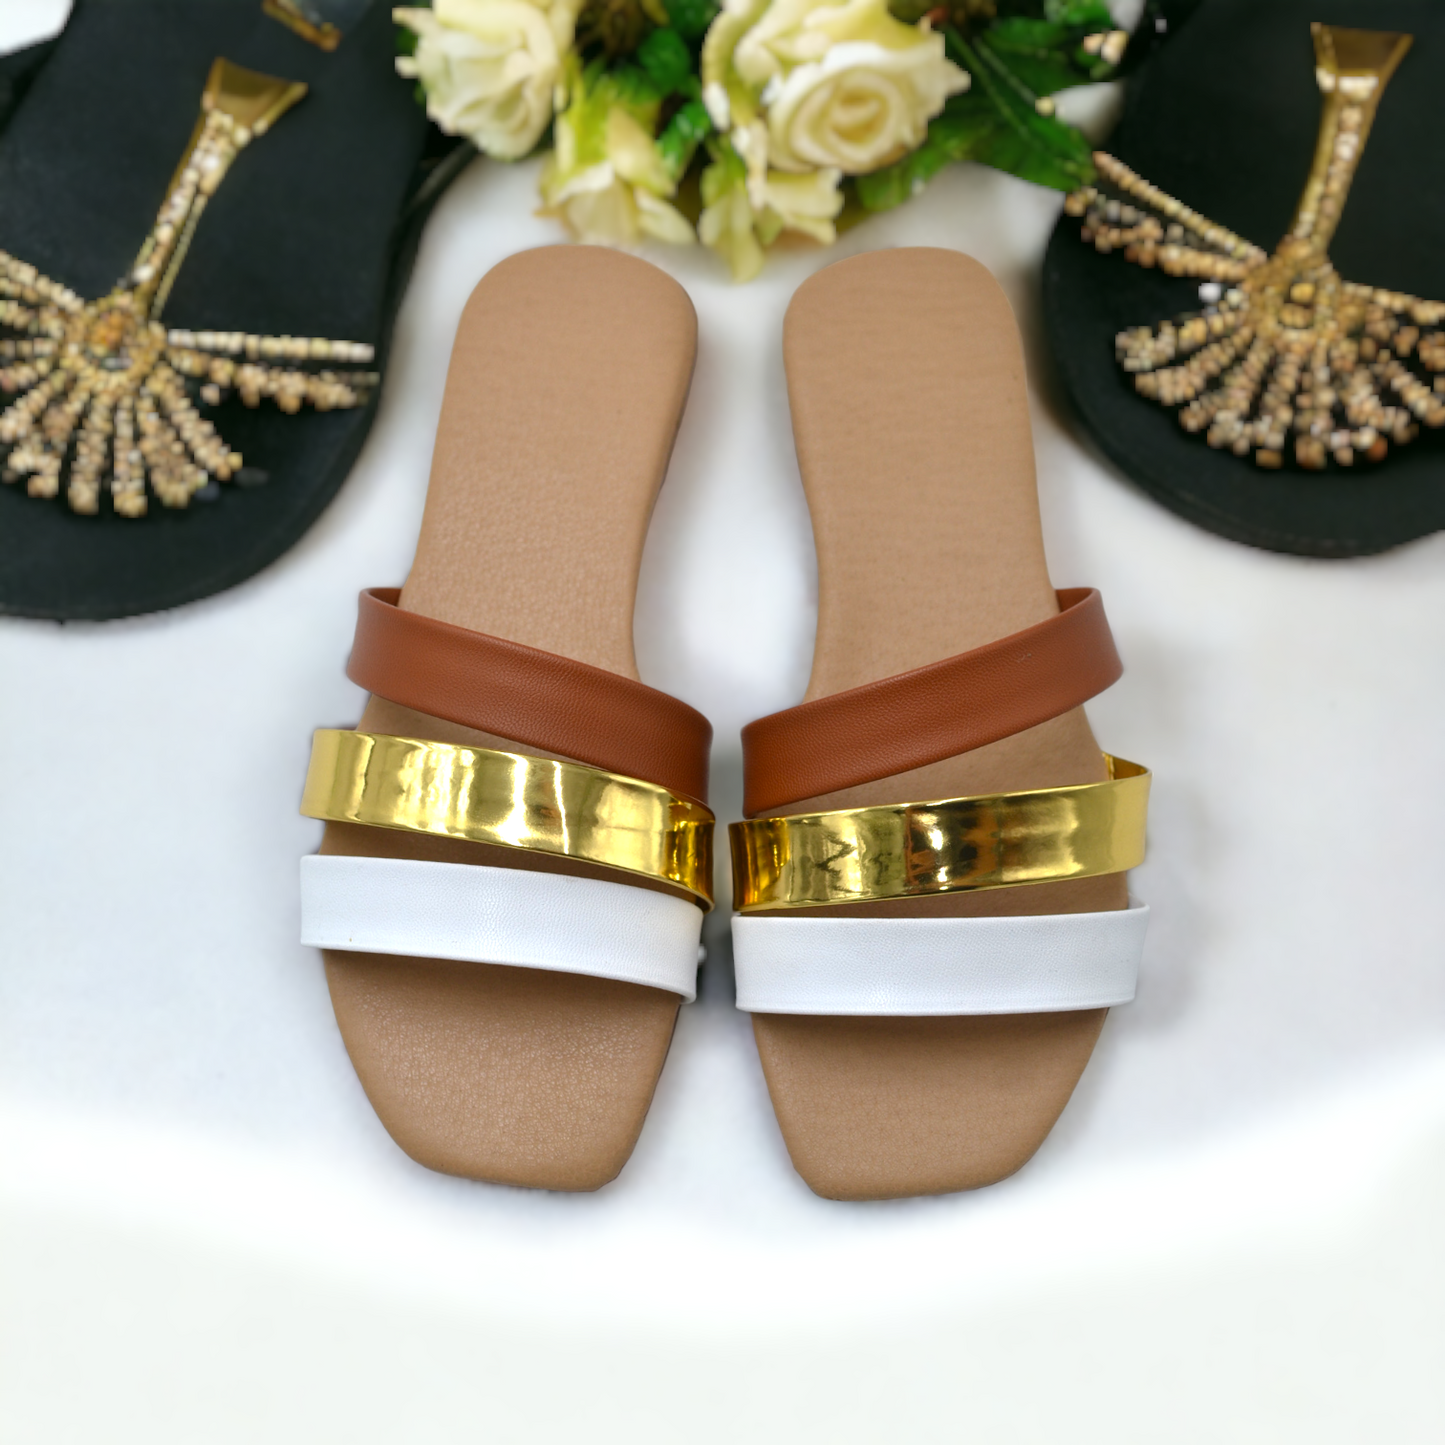 Sandalias para Dama - Sapphire Breeze Shiny Sandals